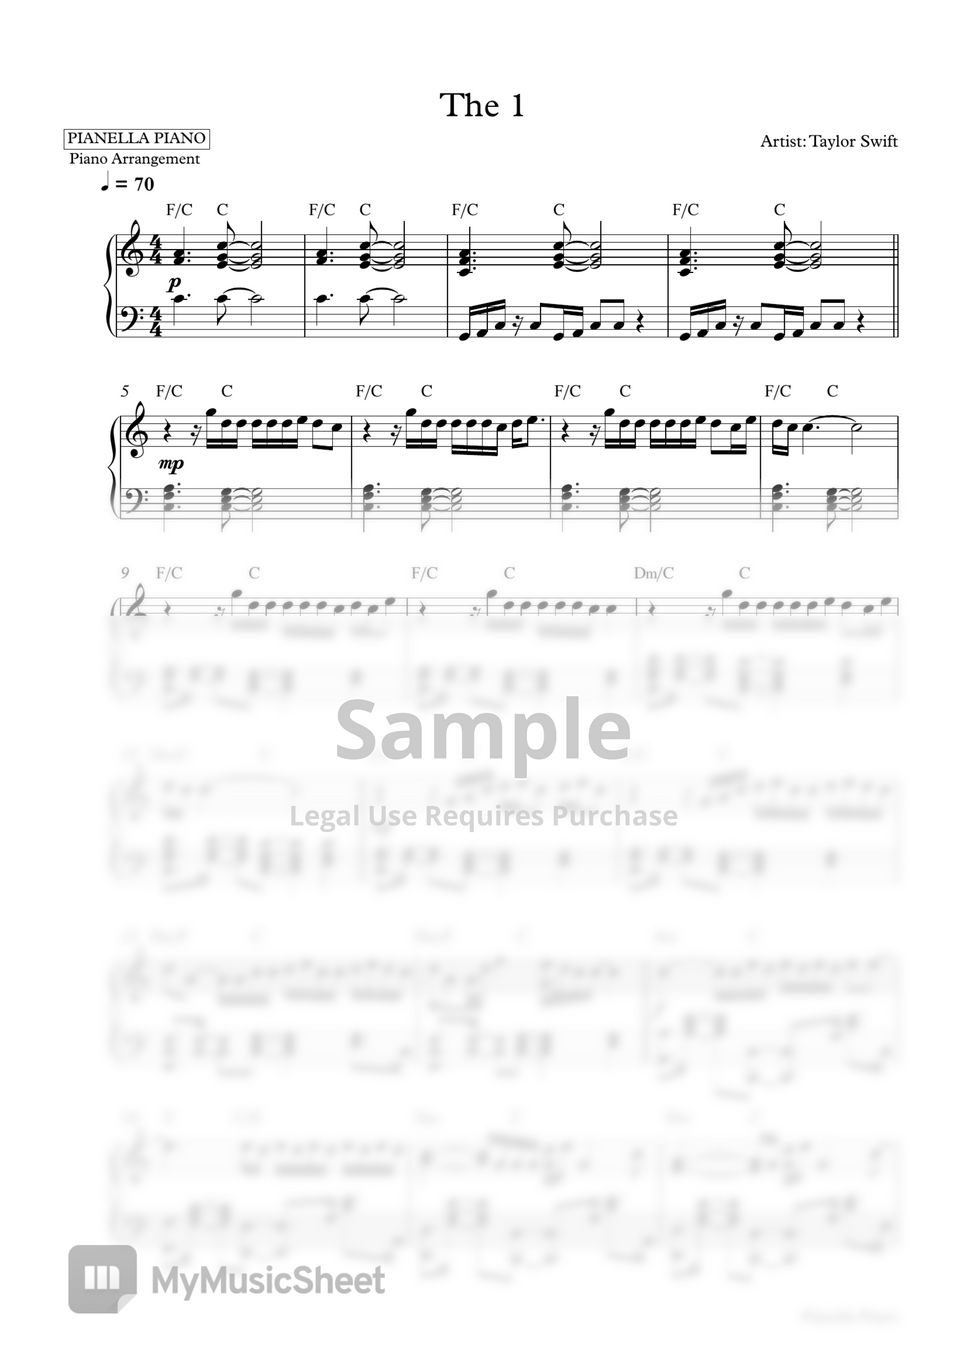 Taylor Swift - the 1 (Piano Sheet) by Pianella Piano